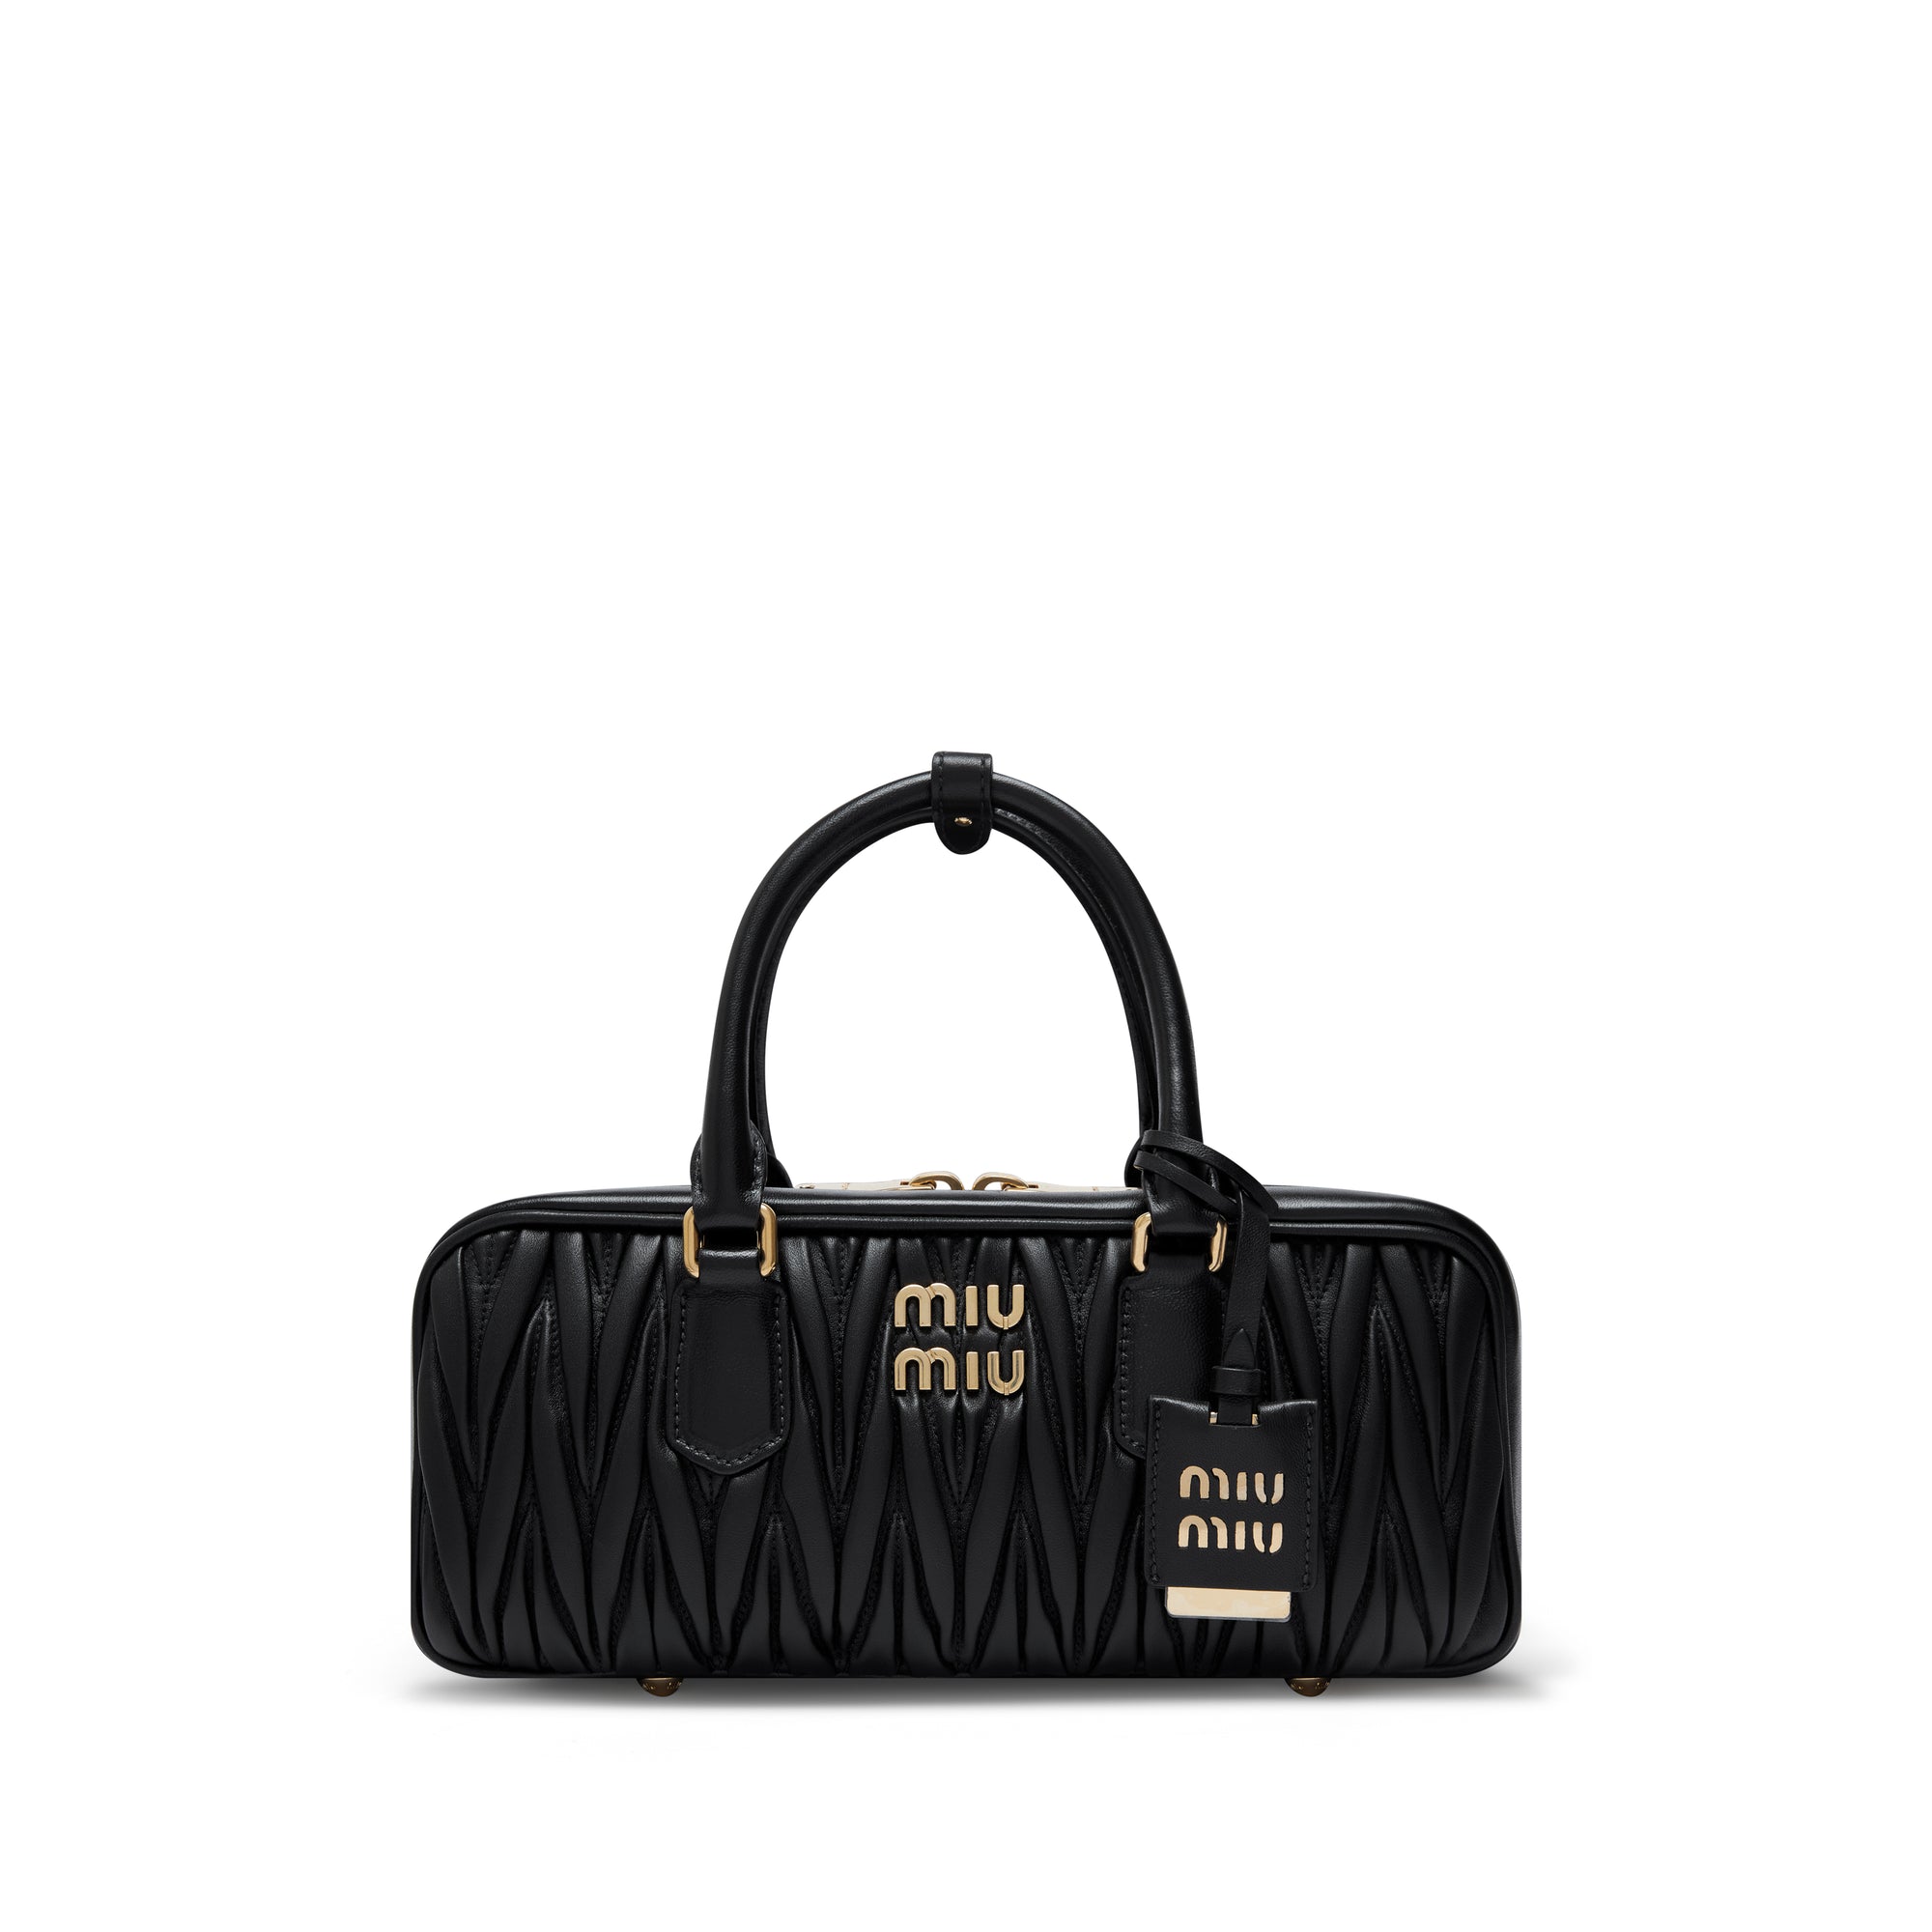 Miu Miu - Women’s Arcadie Matelassé Nappa Leather Bags - (Black) view 1